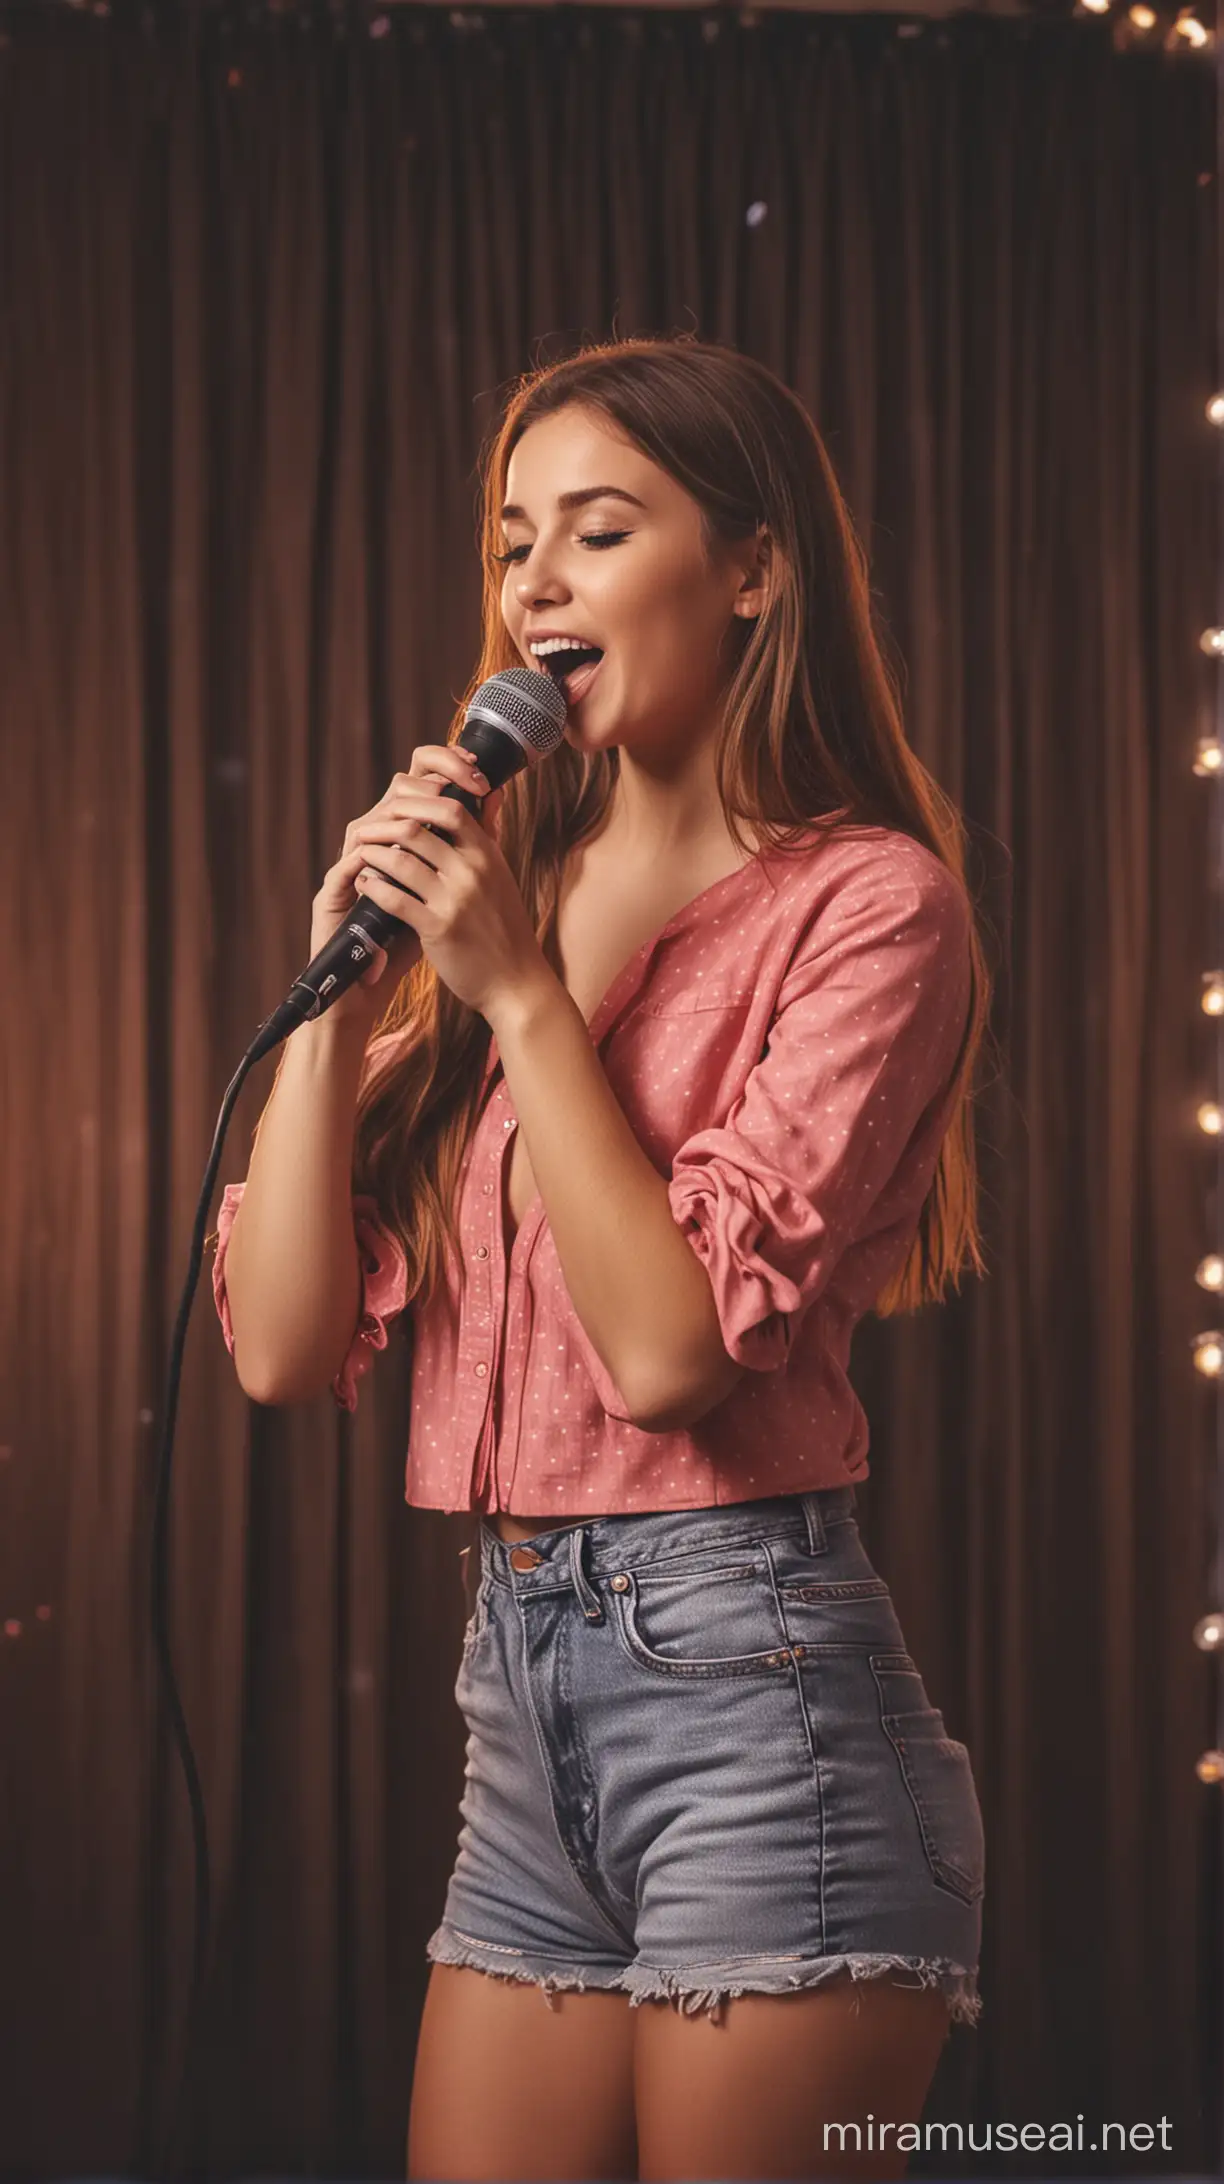 Karaoke Night Girl Singing with Microphone in Hand